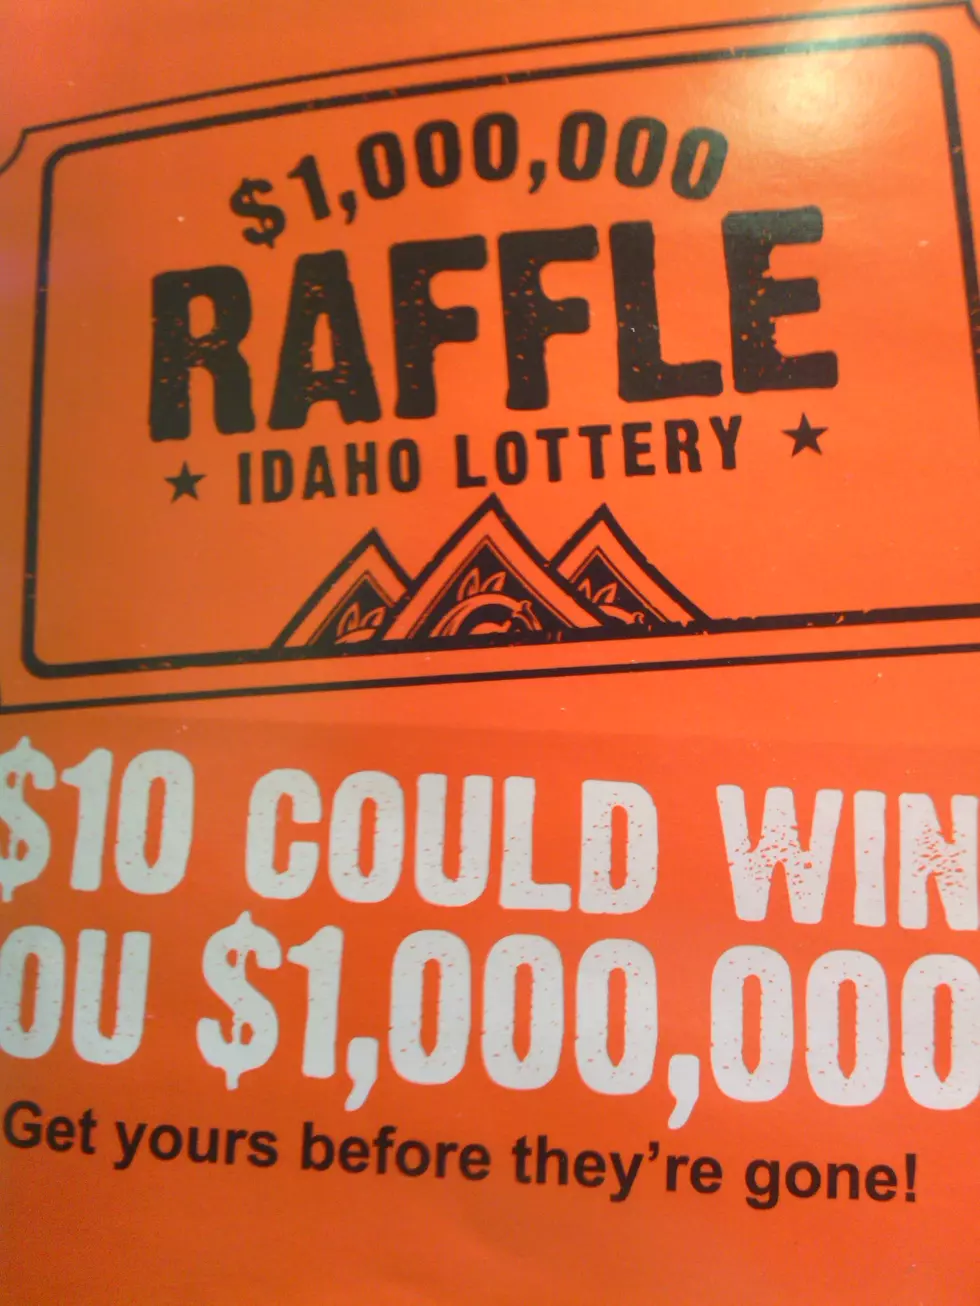 Someone in Twin Falls County Won the Million Dollar Raffle